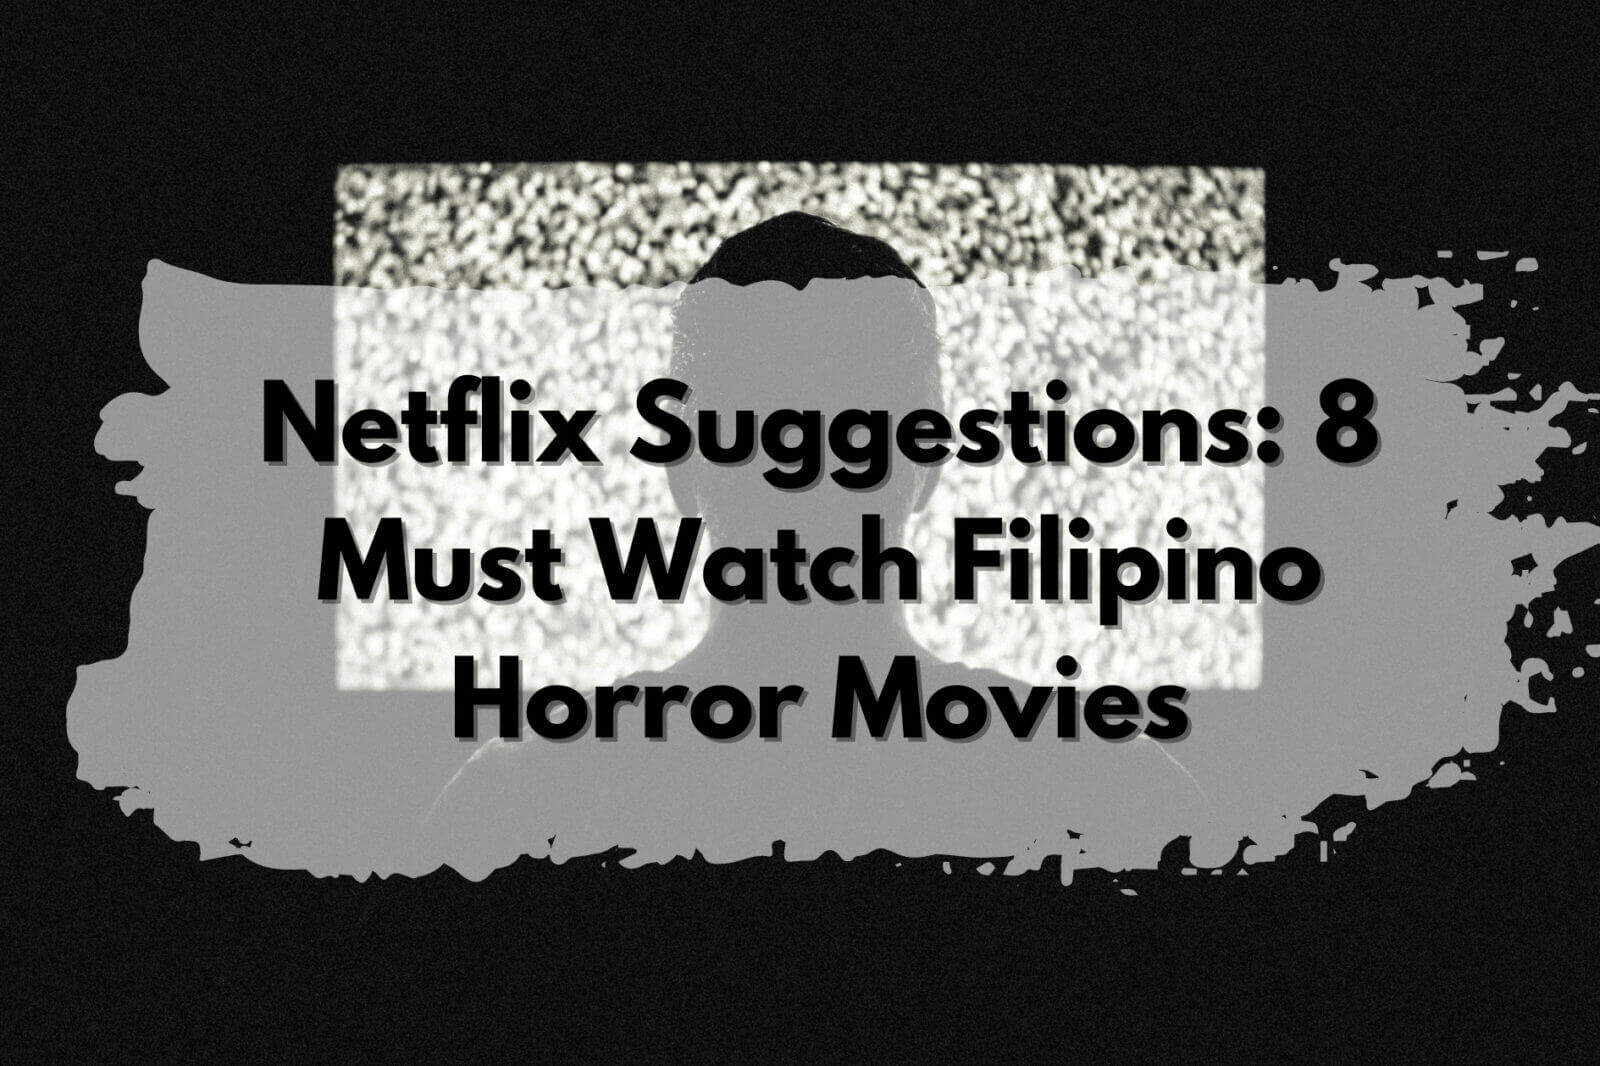 Netflix suggestions Filipino horror movies.